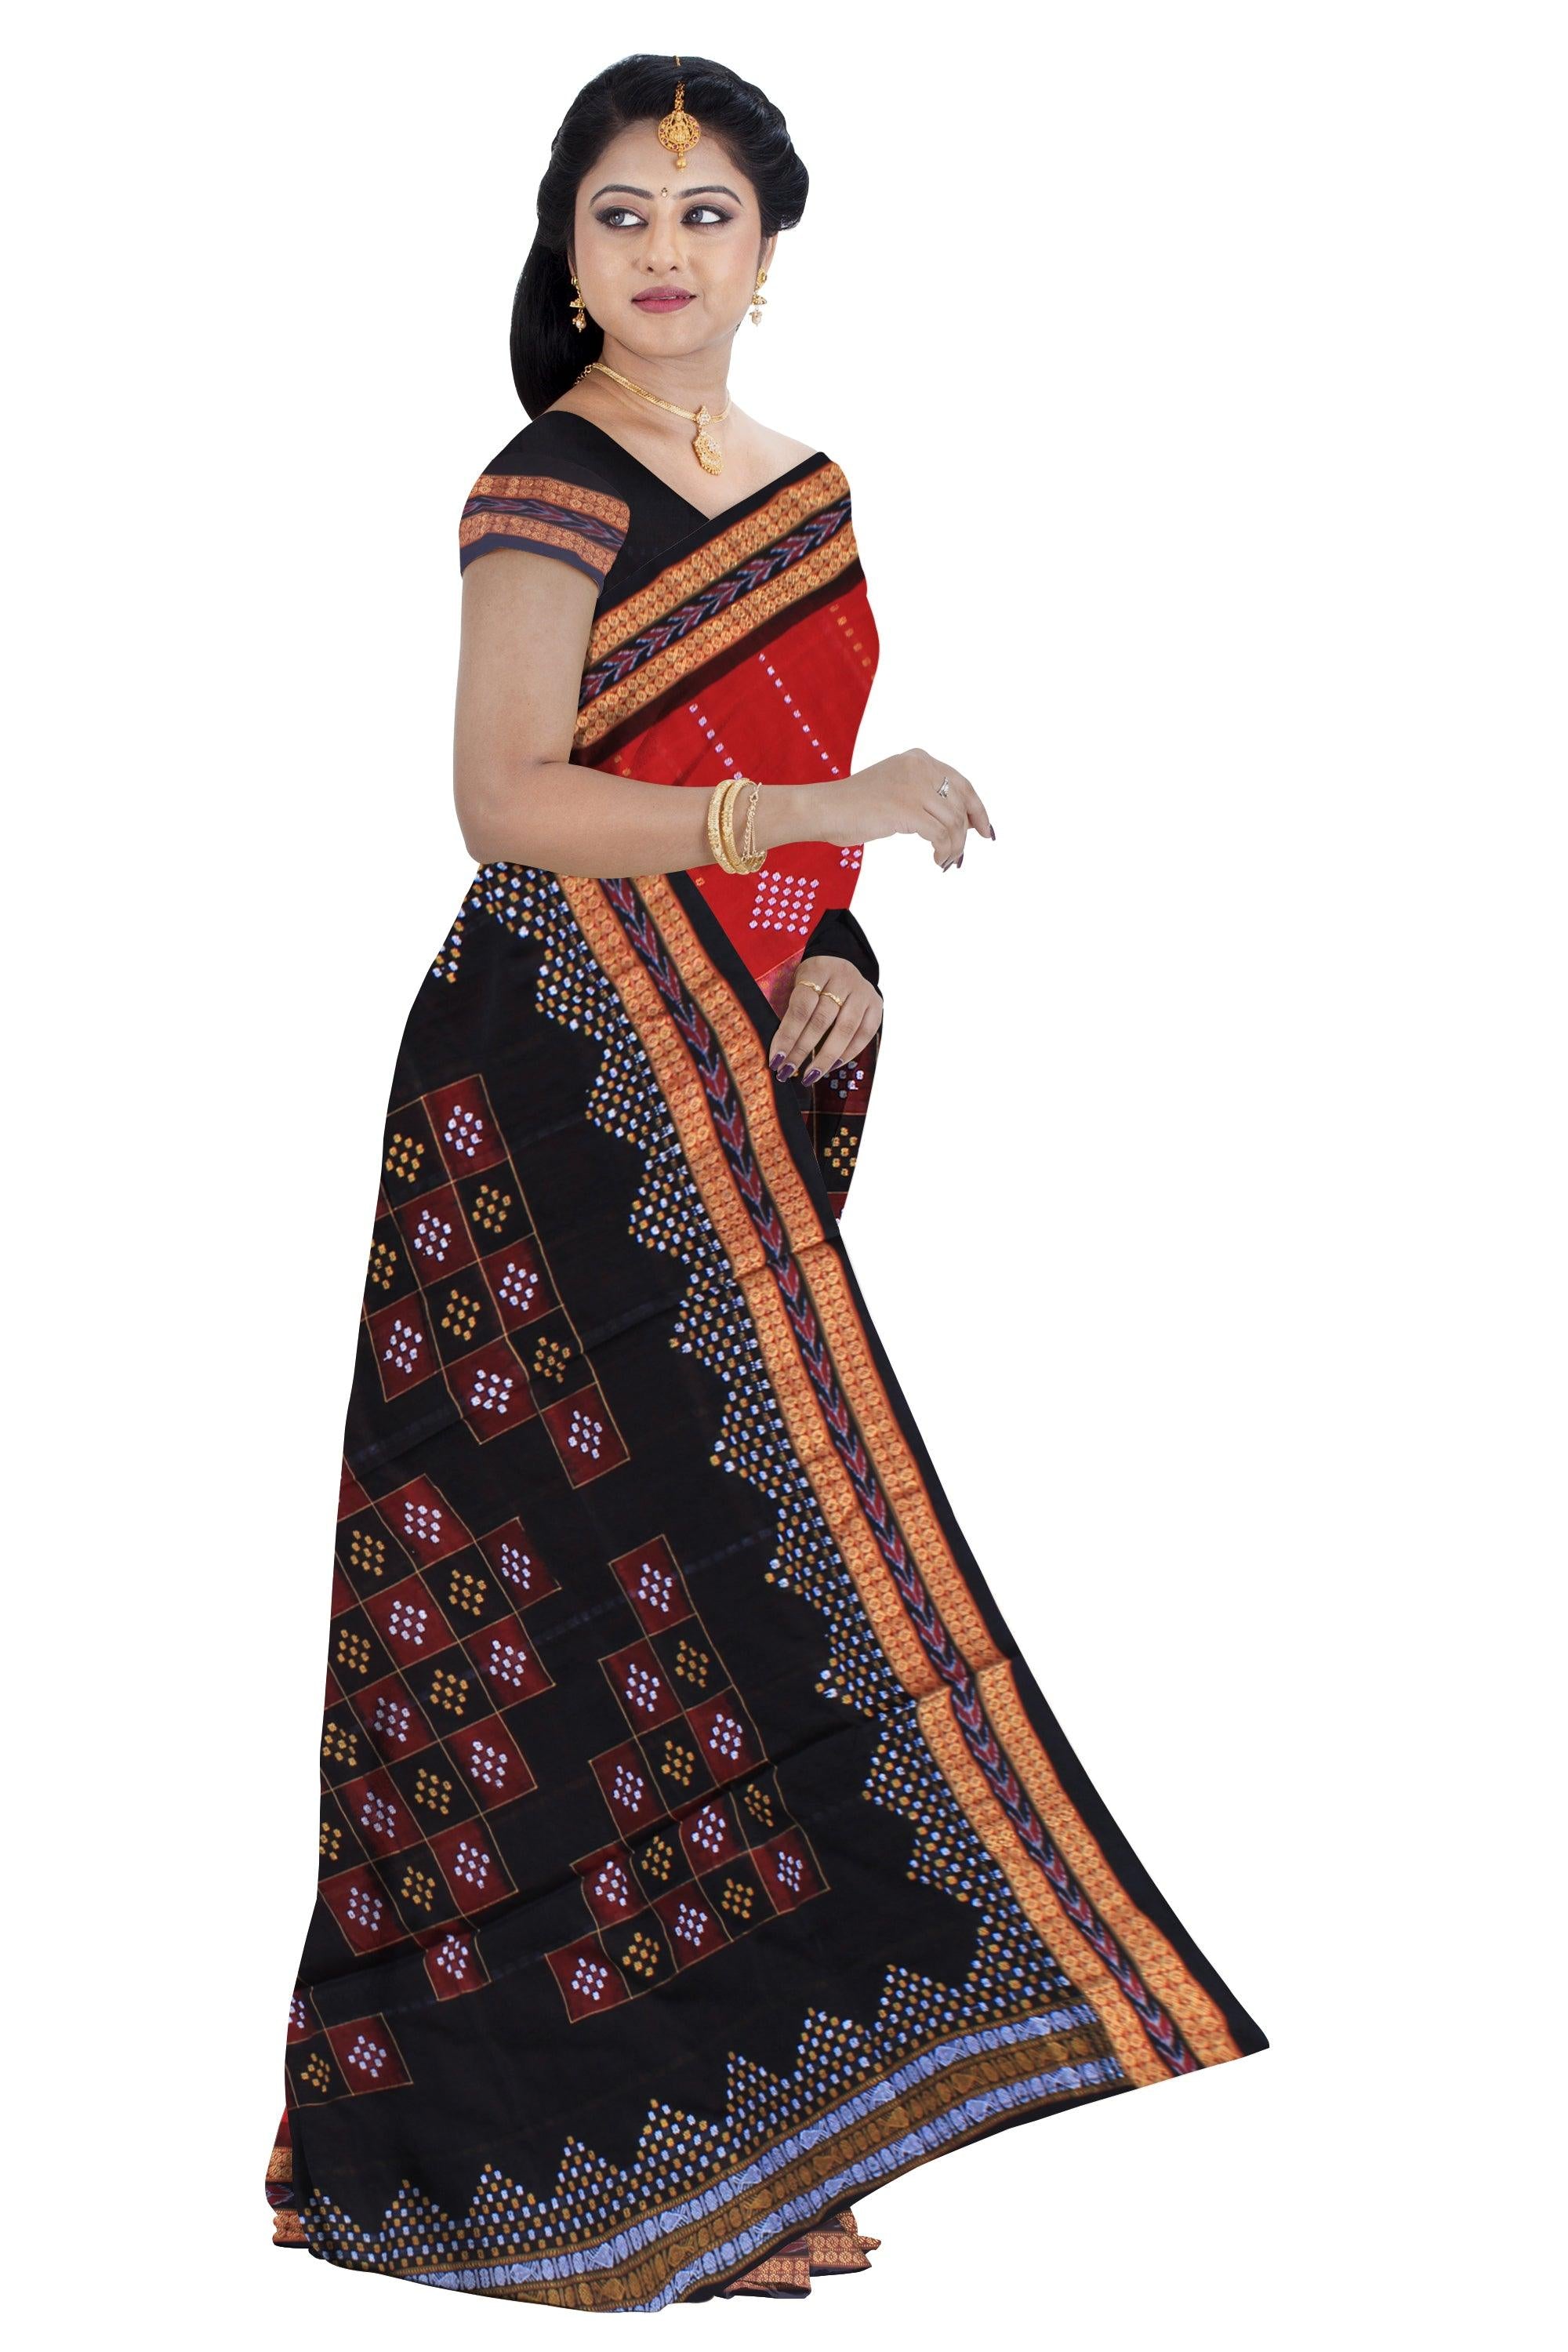 Sambalpuri cotton saree in red , black and white color base, with blouse piece. - Koshali Arts & Crafts Enterprise